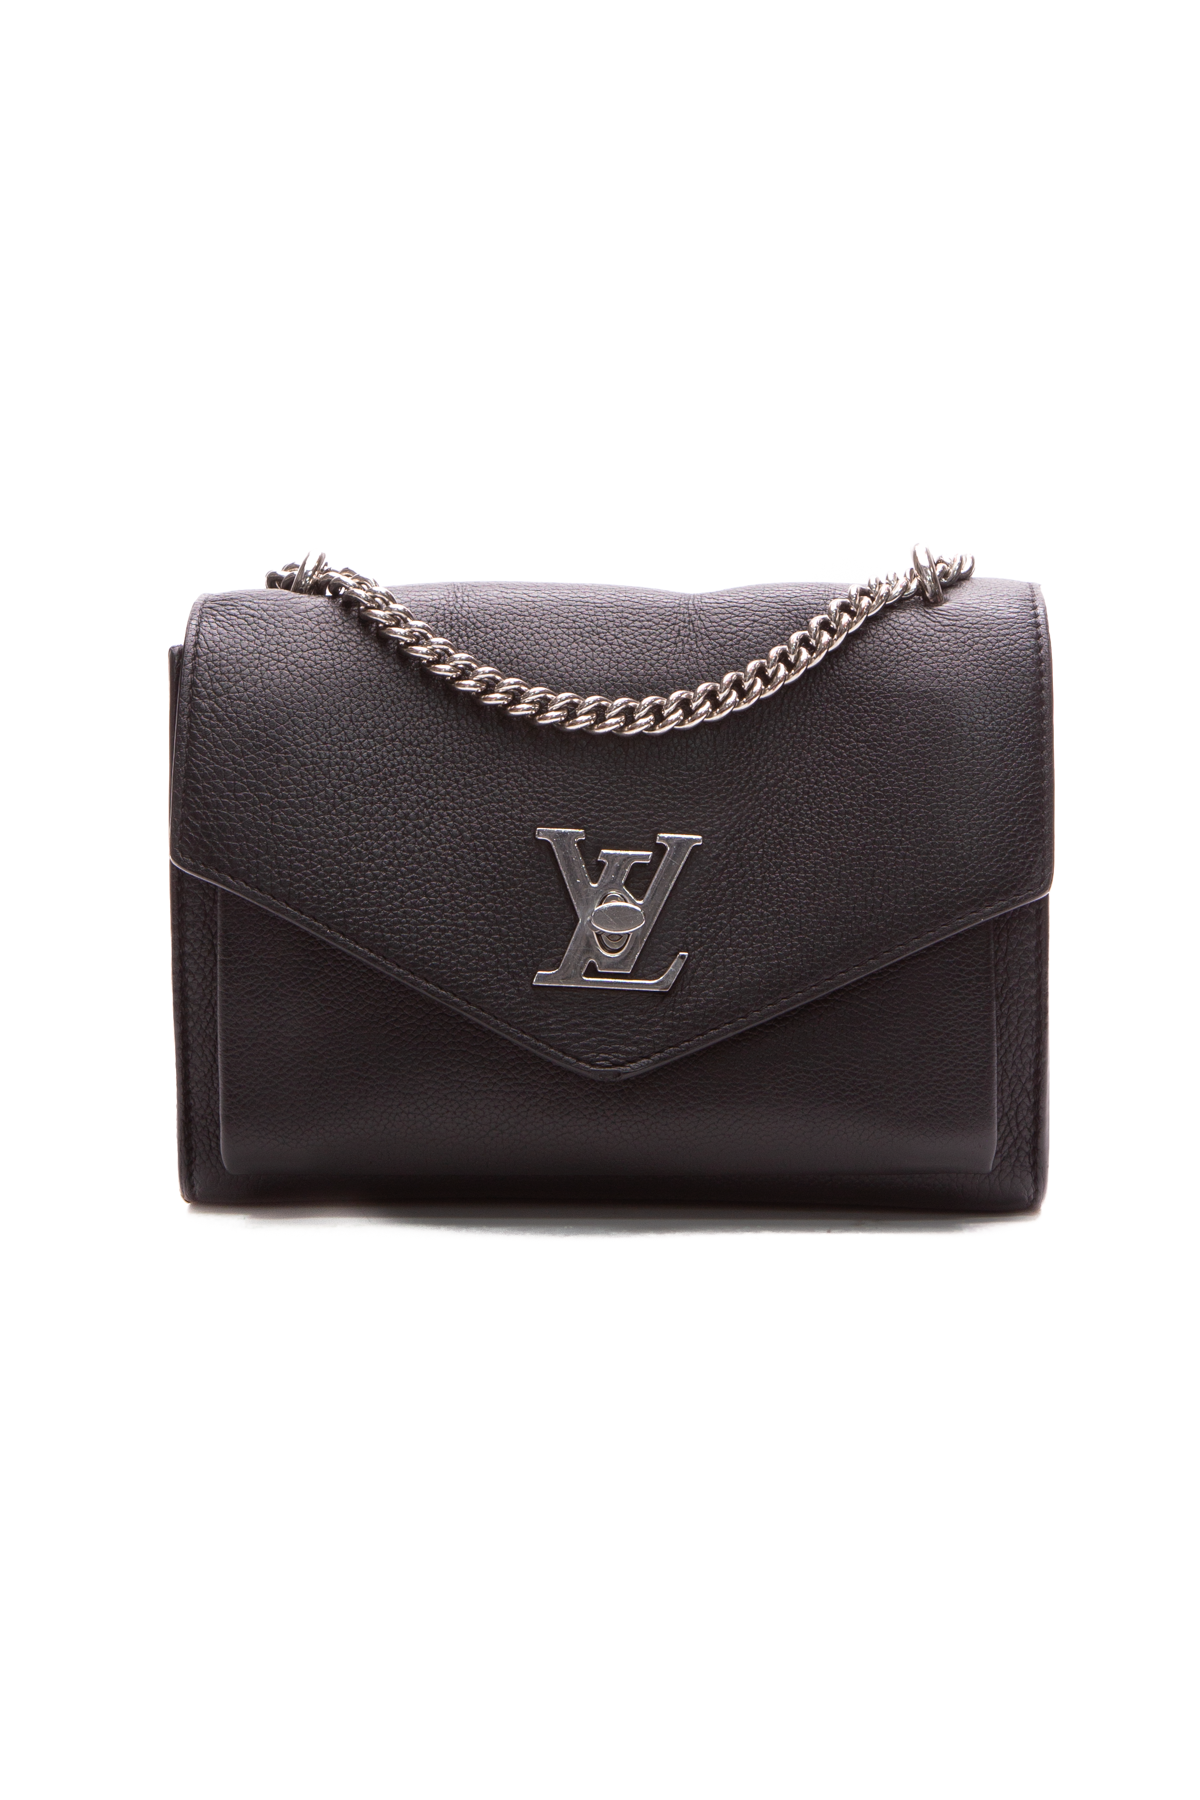 Lot - Louis Vuitton Black Epi Leather Byushi Shoulder Bag Date Code: SP0020